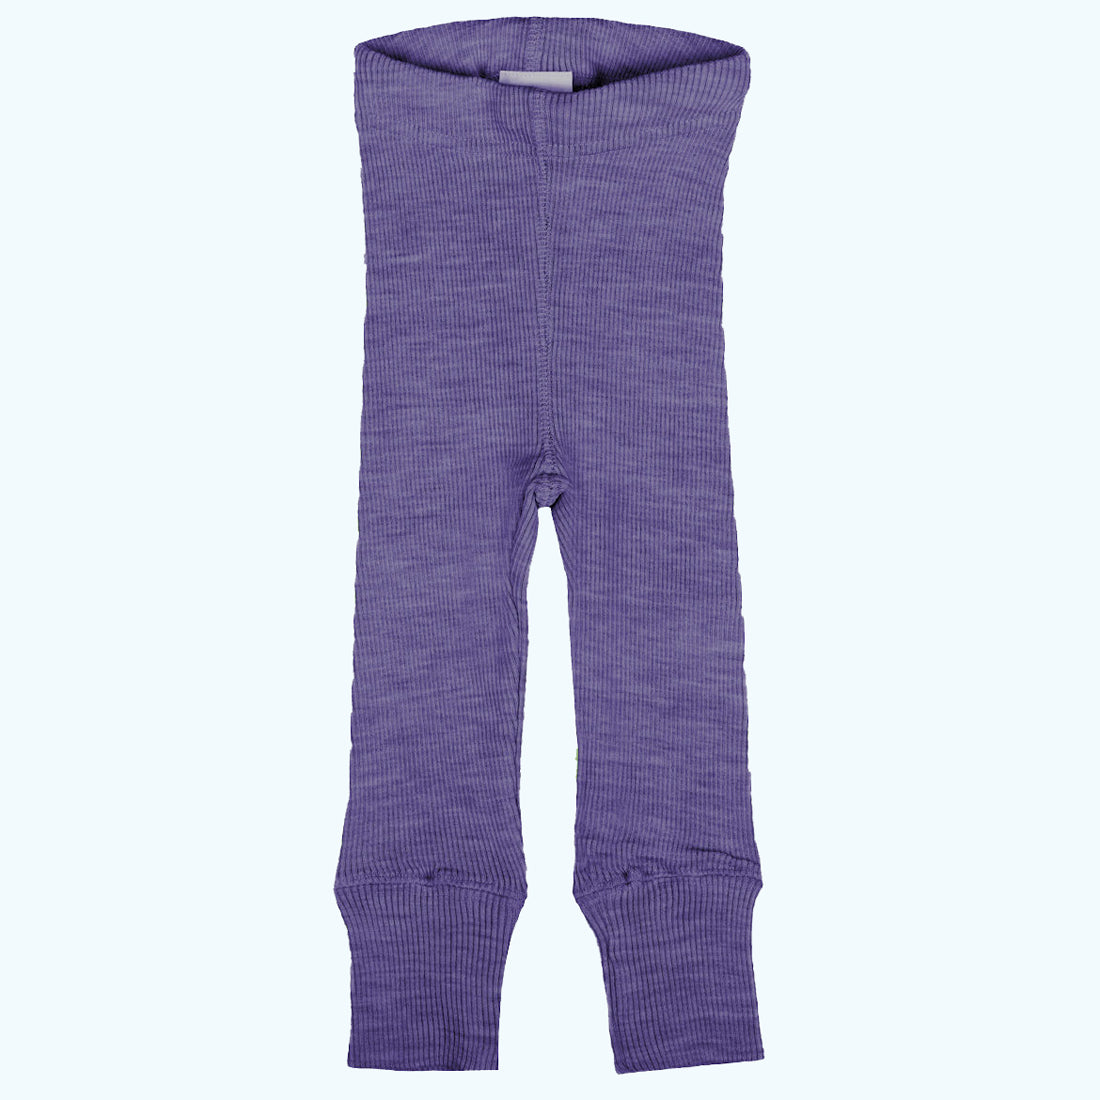 Product Name: *ASA Woolen Leggings for Women, Winter Bottom Wear Combo Pack  of 4 Free Size... | Woolen leggings, Women's leggings, Winter bottoms